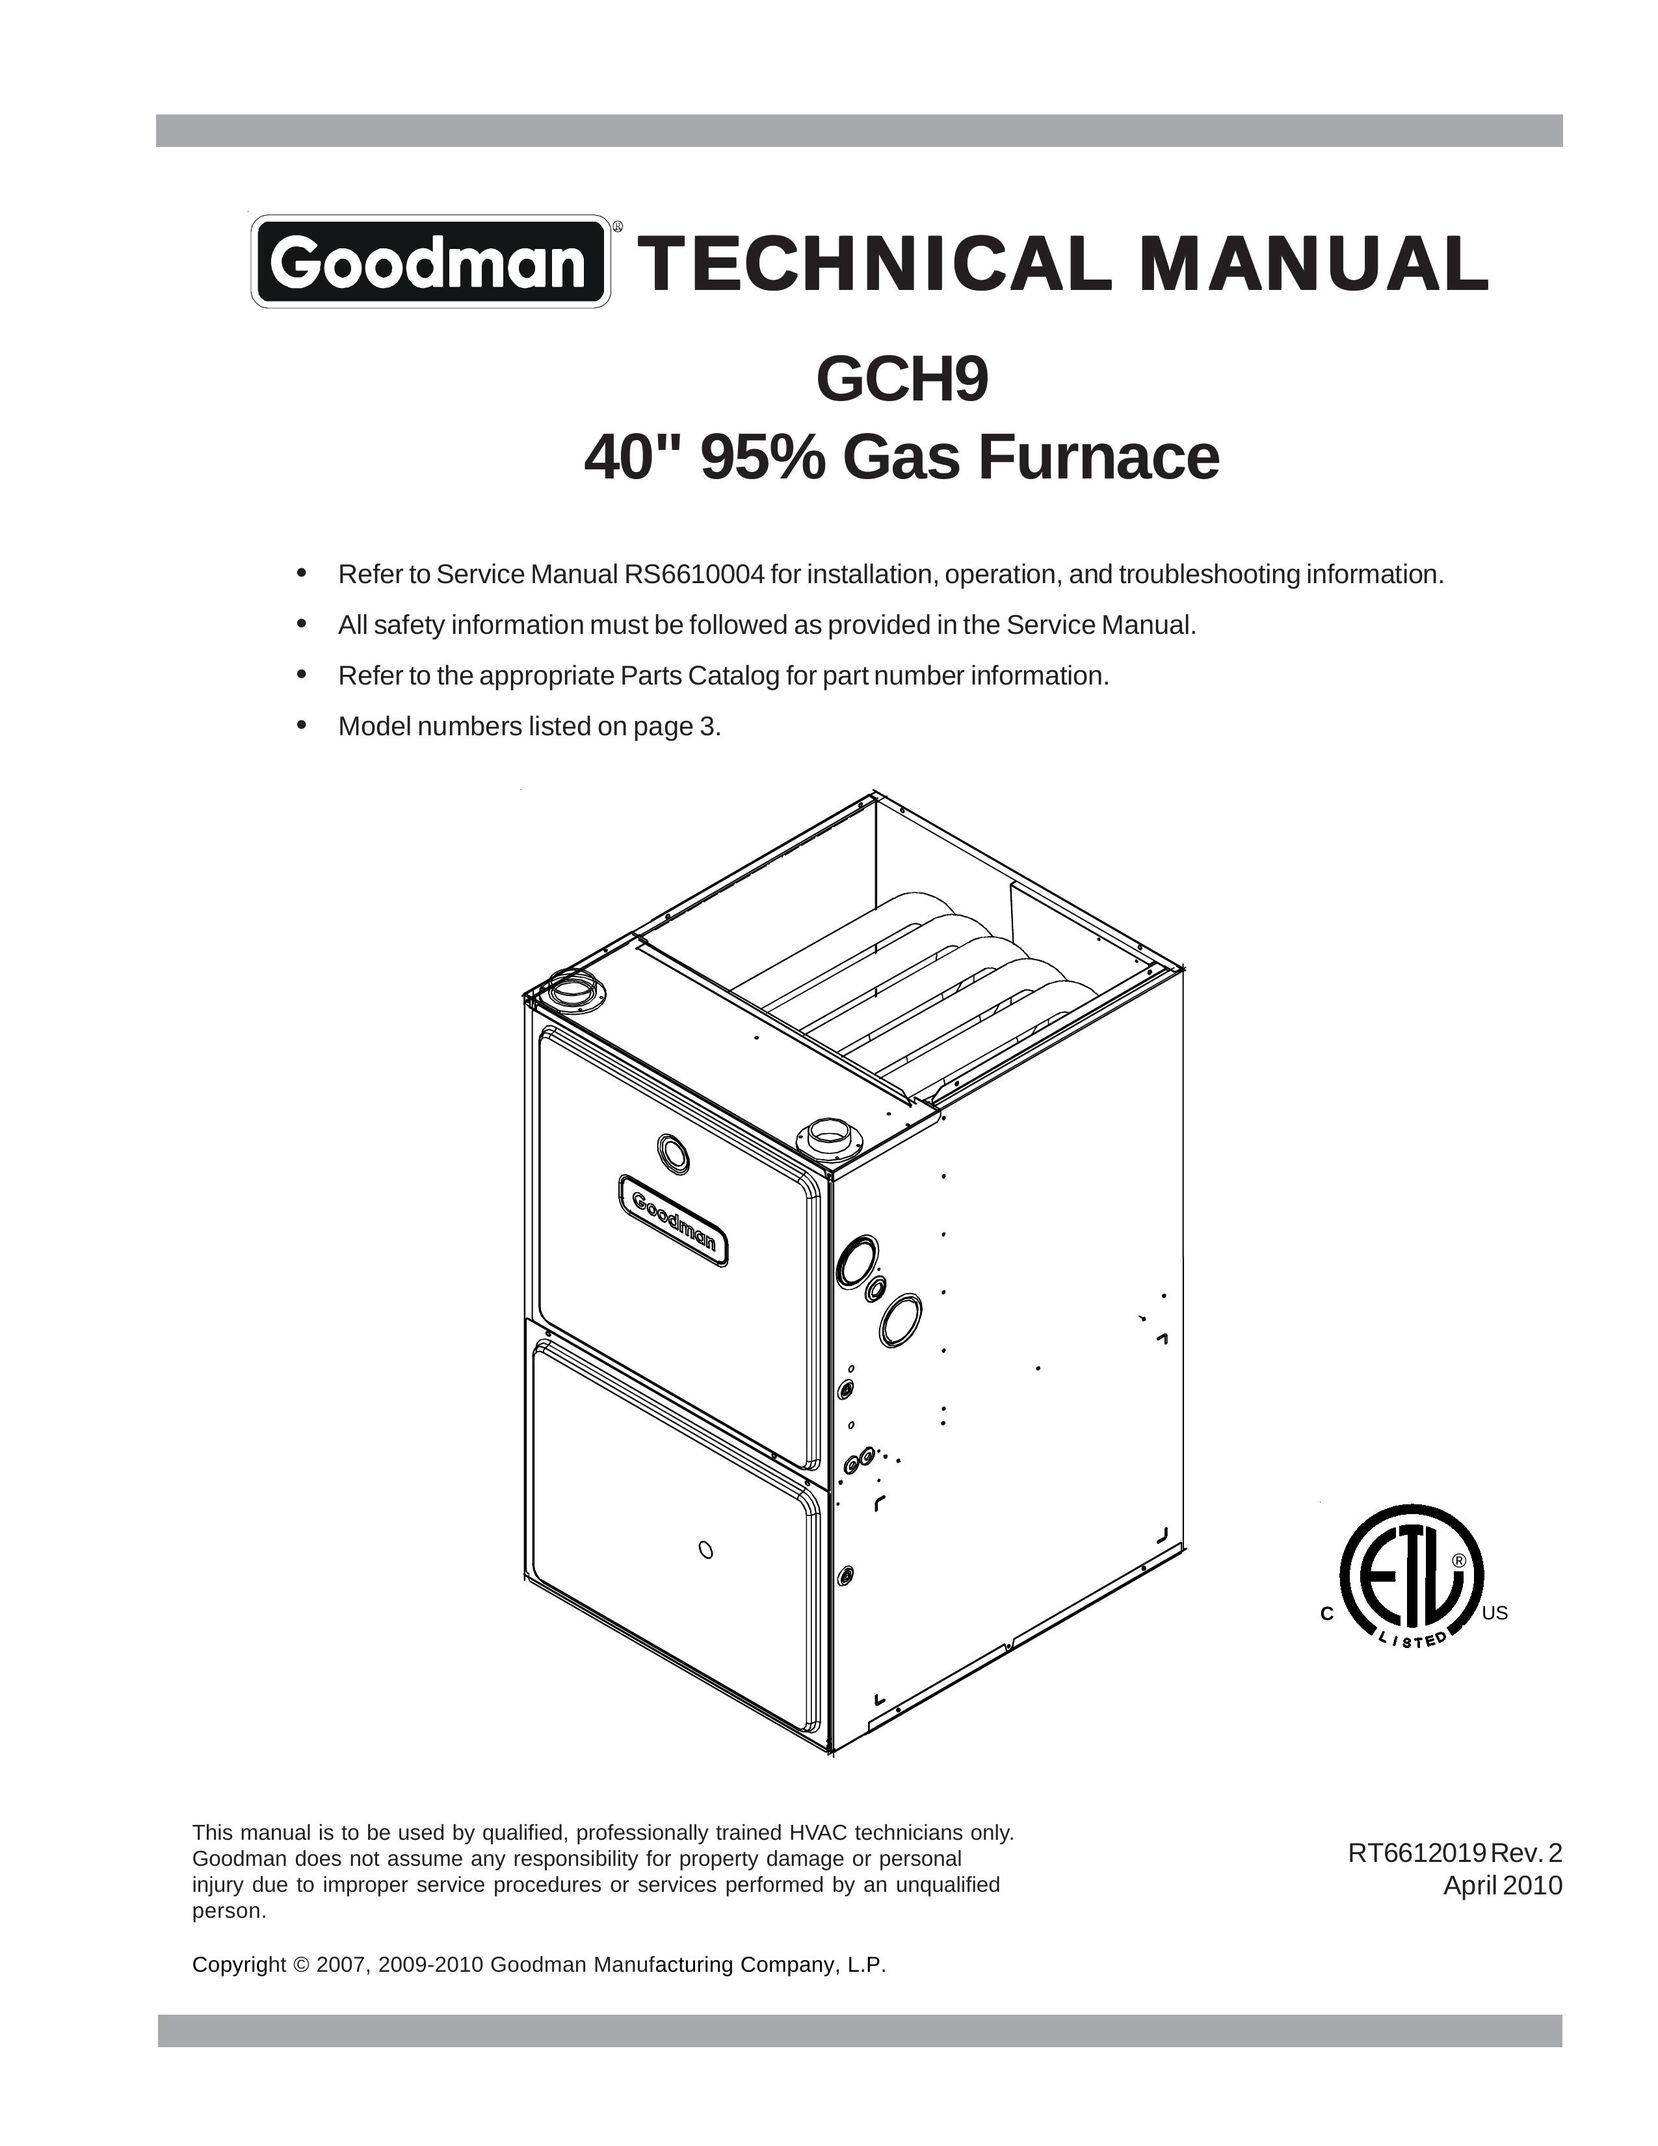 Goodman Mfg GCH9 Furnace User Manual